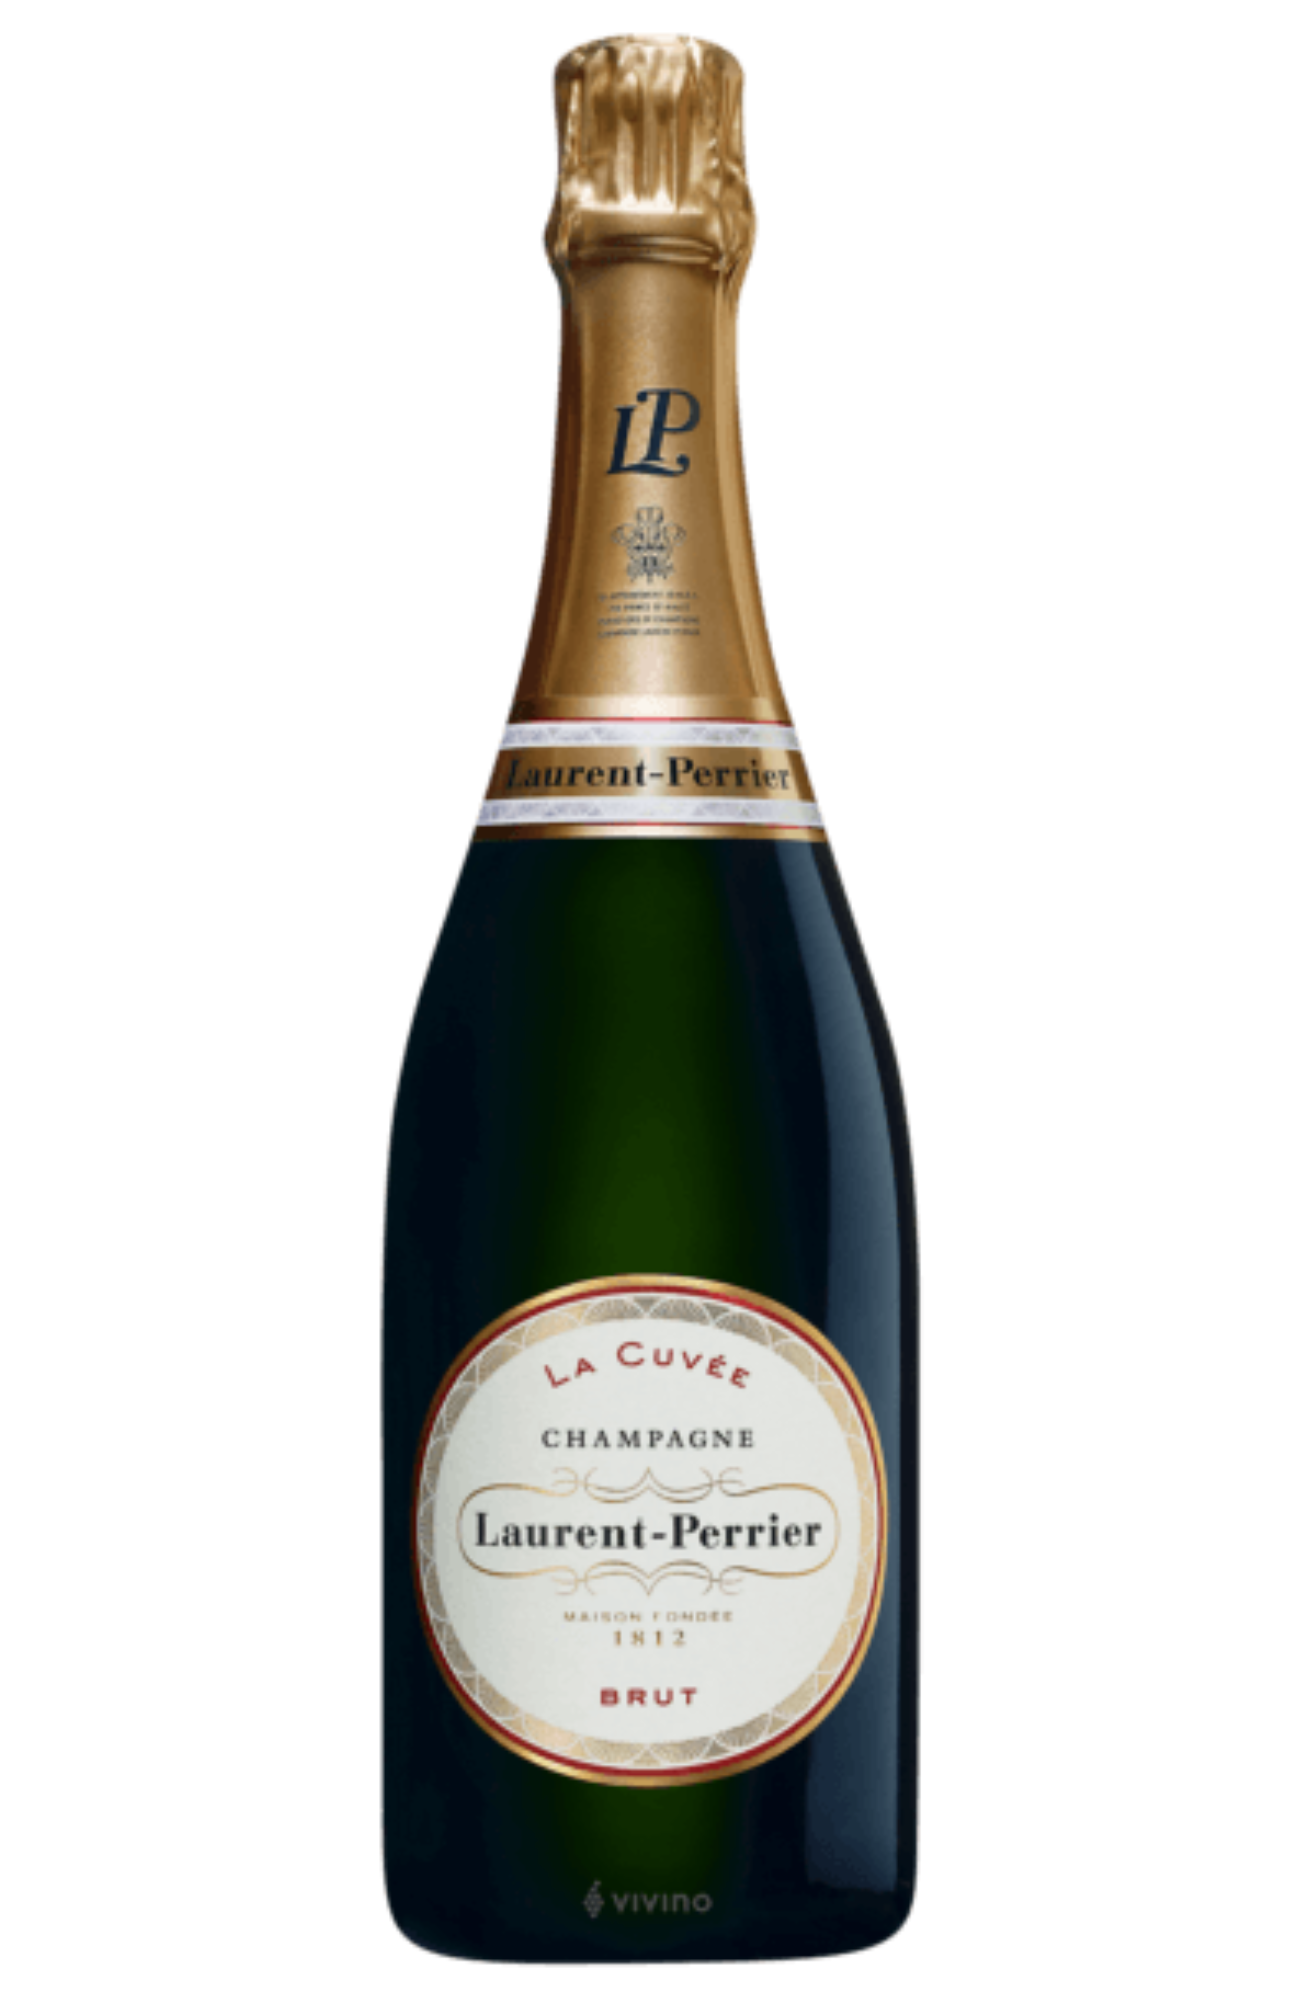 Laurent Perrier, La Cuvee Champagne NV